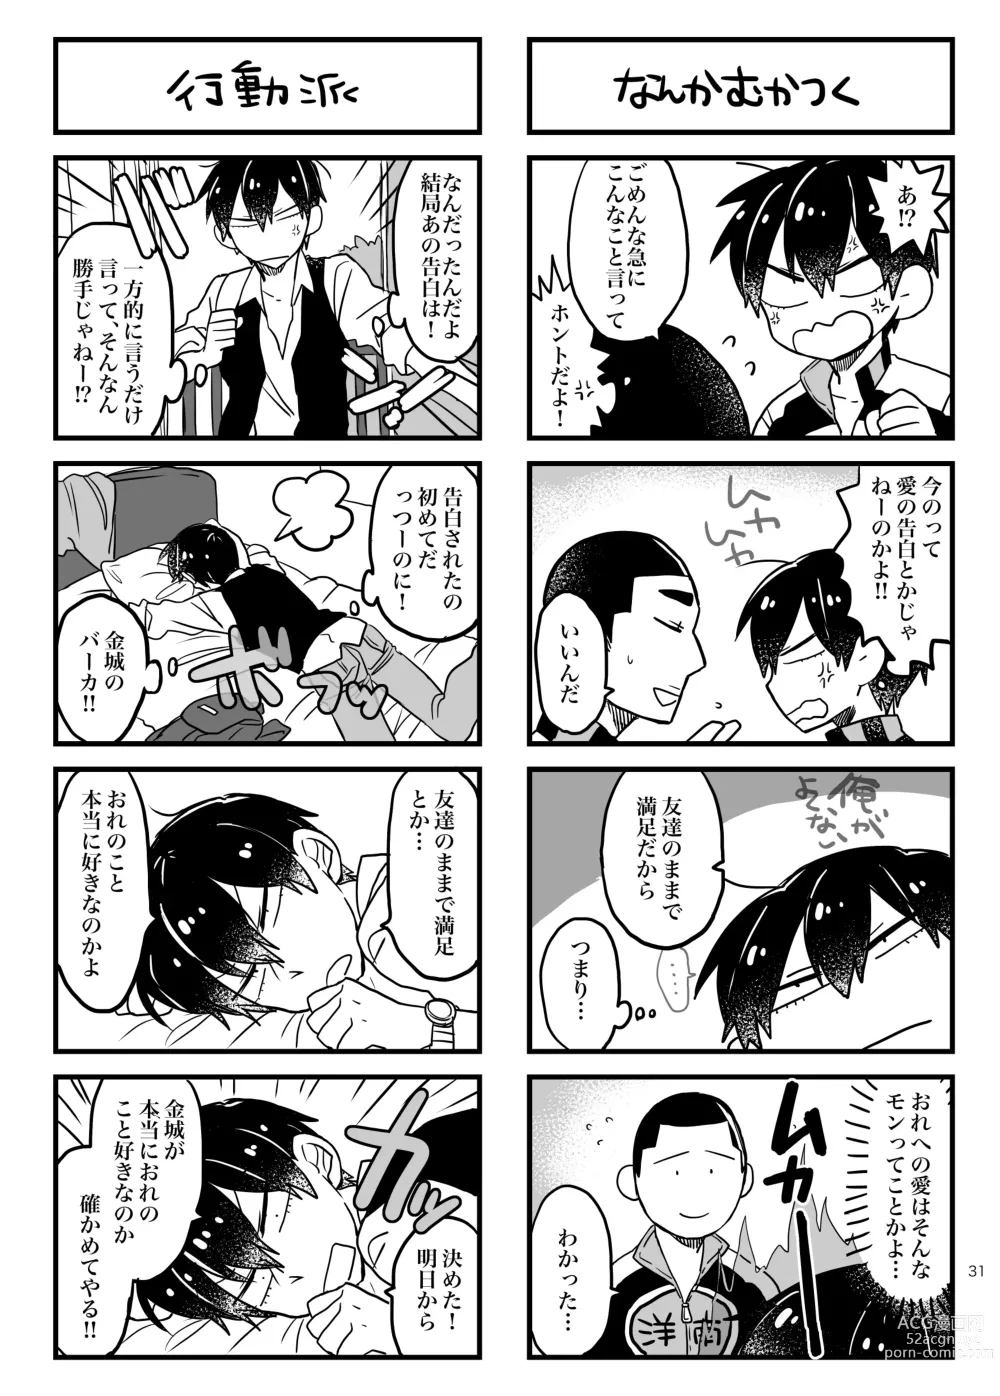 Page 29 of doujinshi Baby wo Namagoroshii!